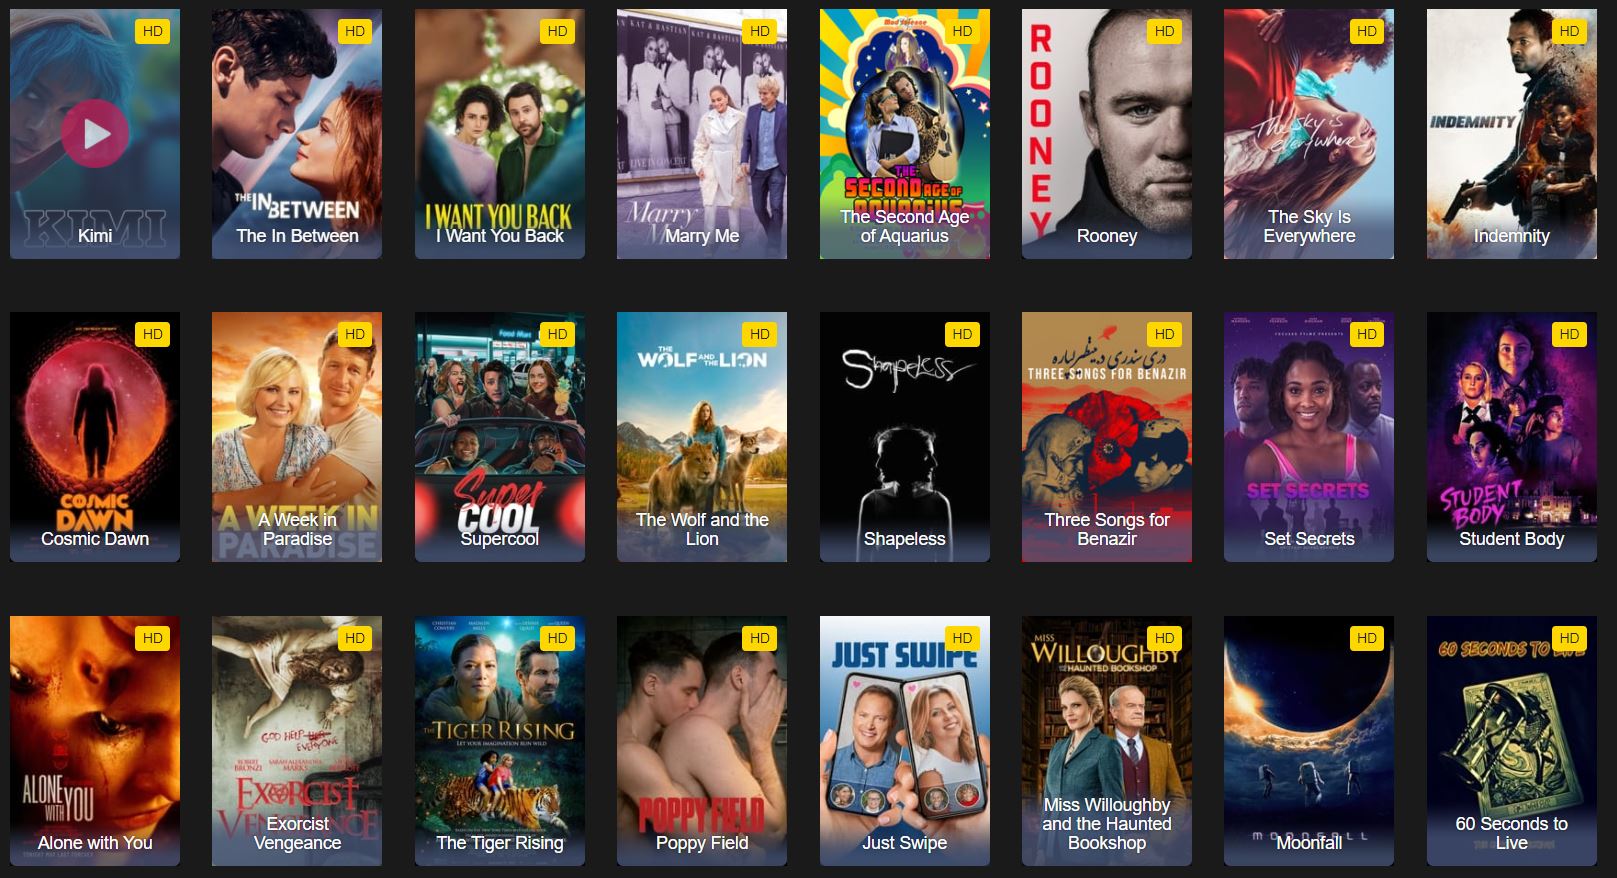 E123movies.Com Offers HD Movies, Dramas And TV Shows For Free